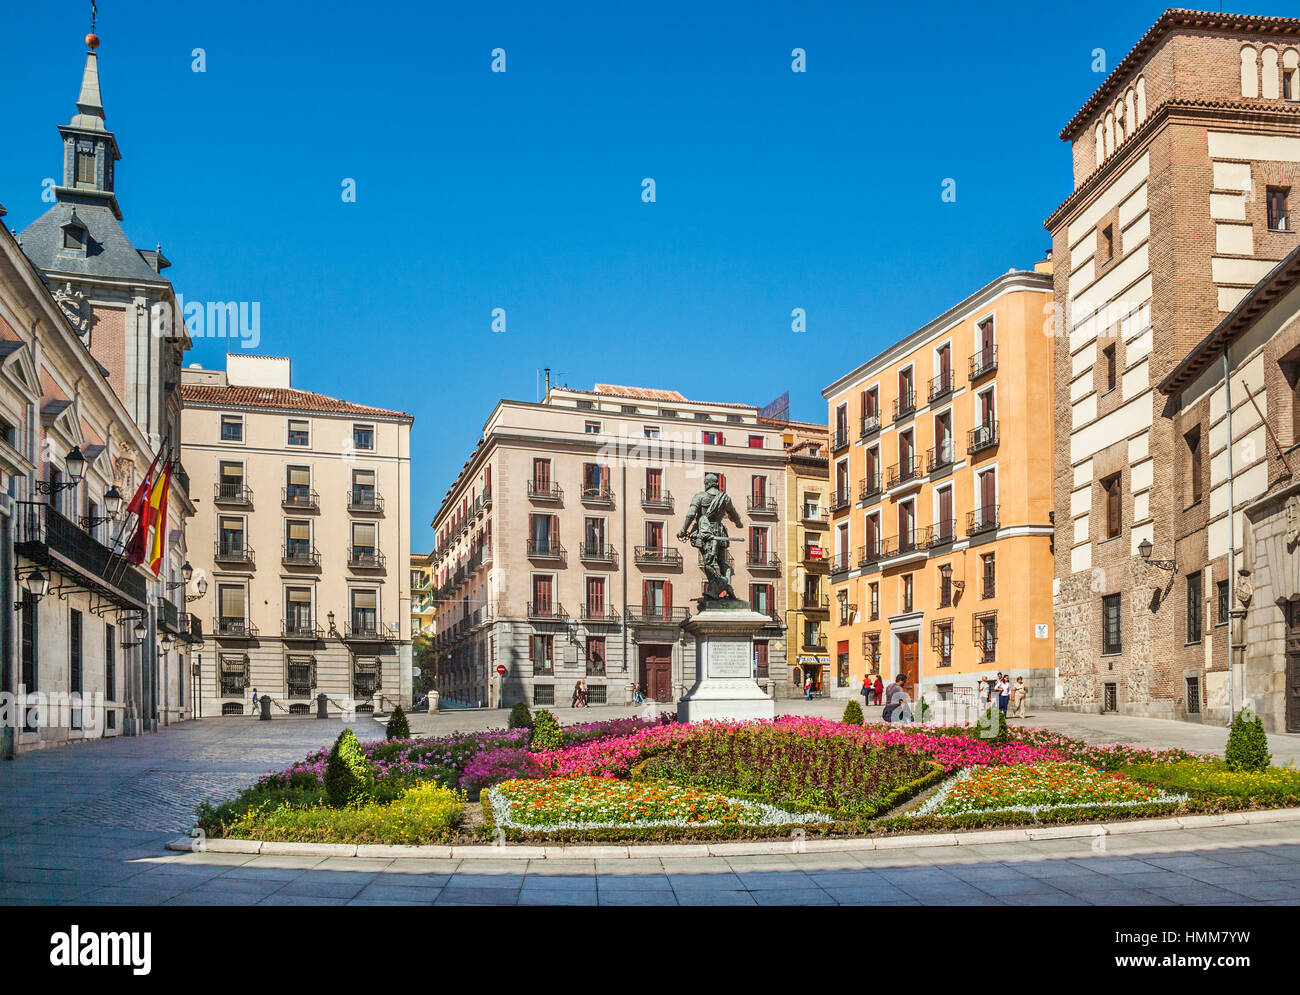 Espagne, Madrid, Centro, Plaza de la Villa avec la statue d'Alvaro de Bazan, flanqué de la Casa de la Villa, l'hôtel de ville et la Torre de los Lujanes b Banque D'Images